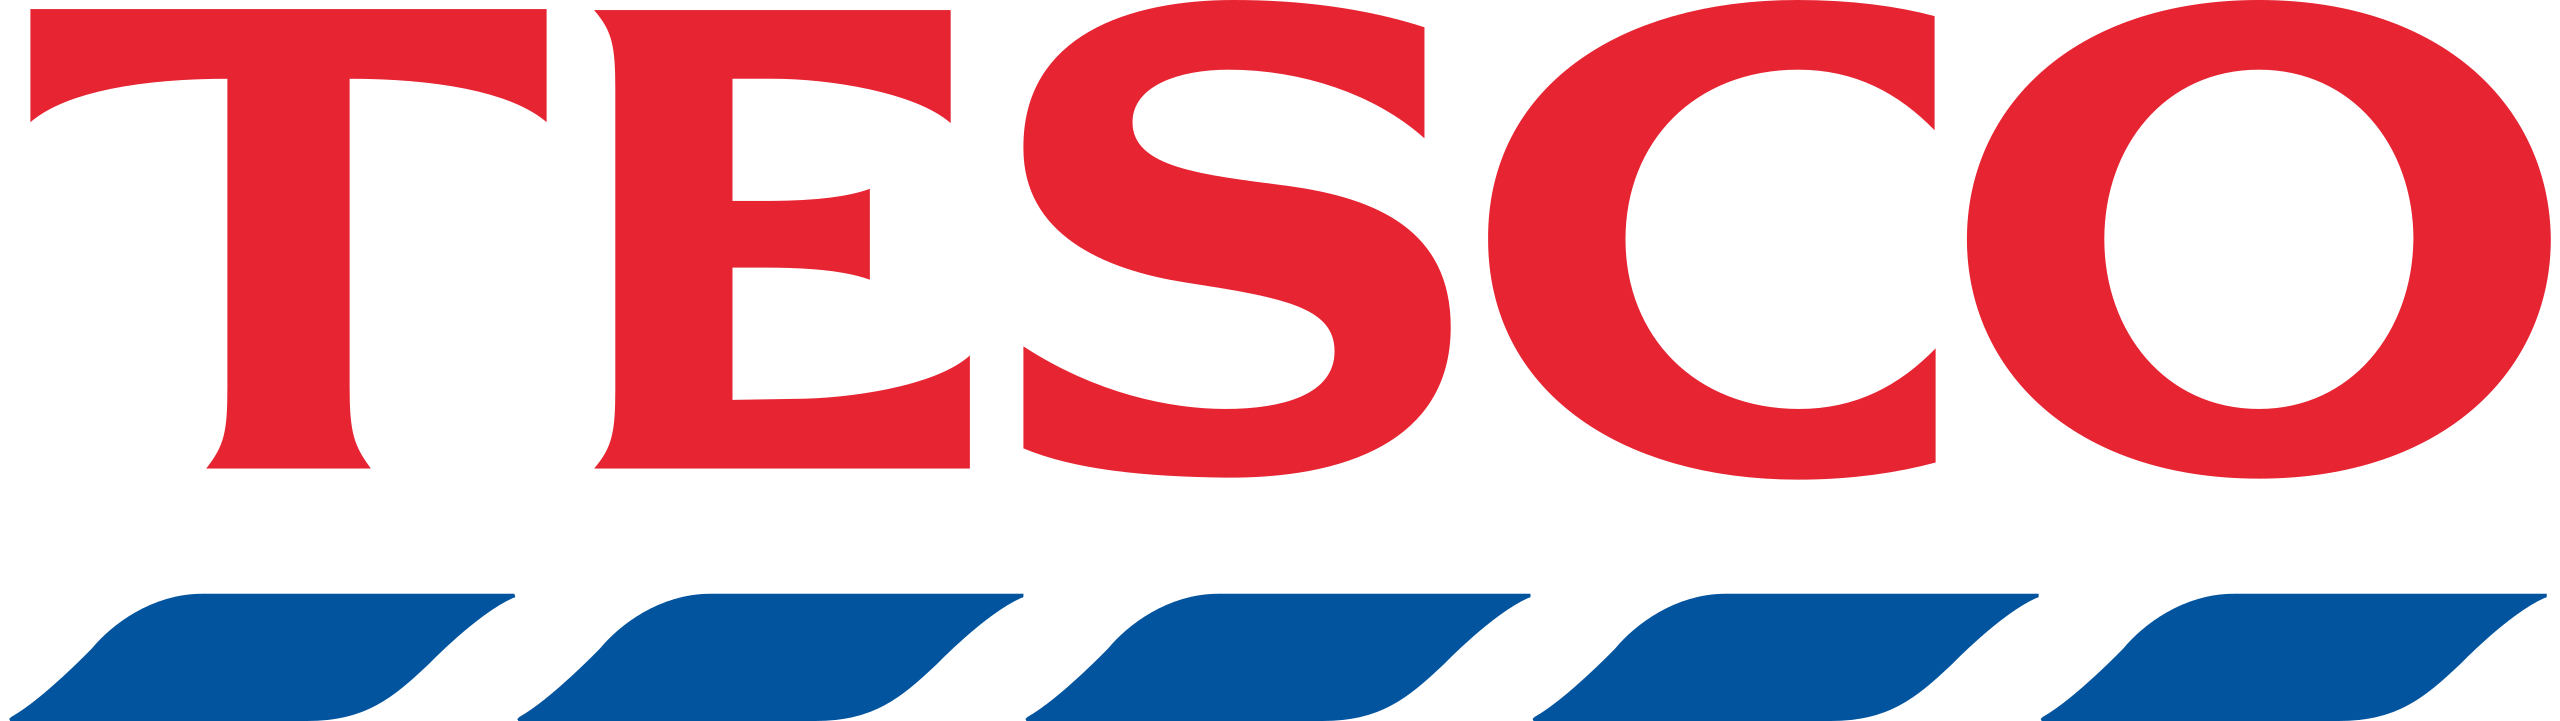 Tesco Brand Logo